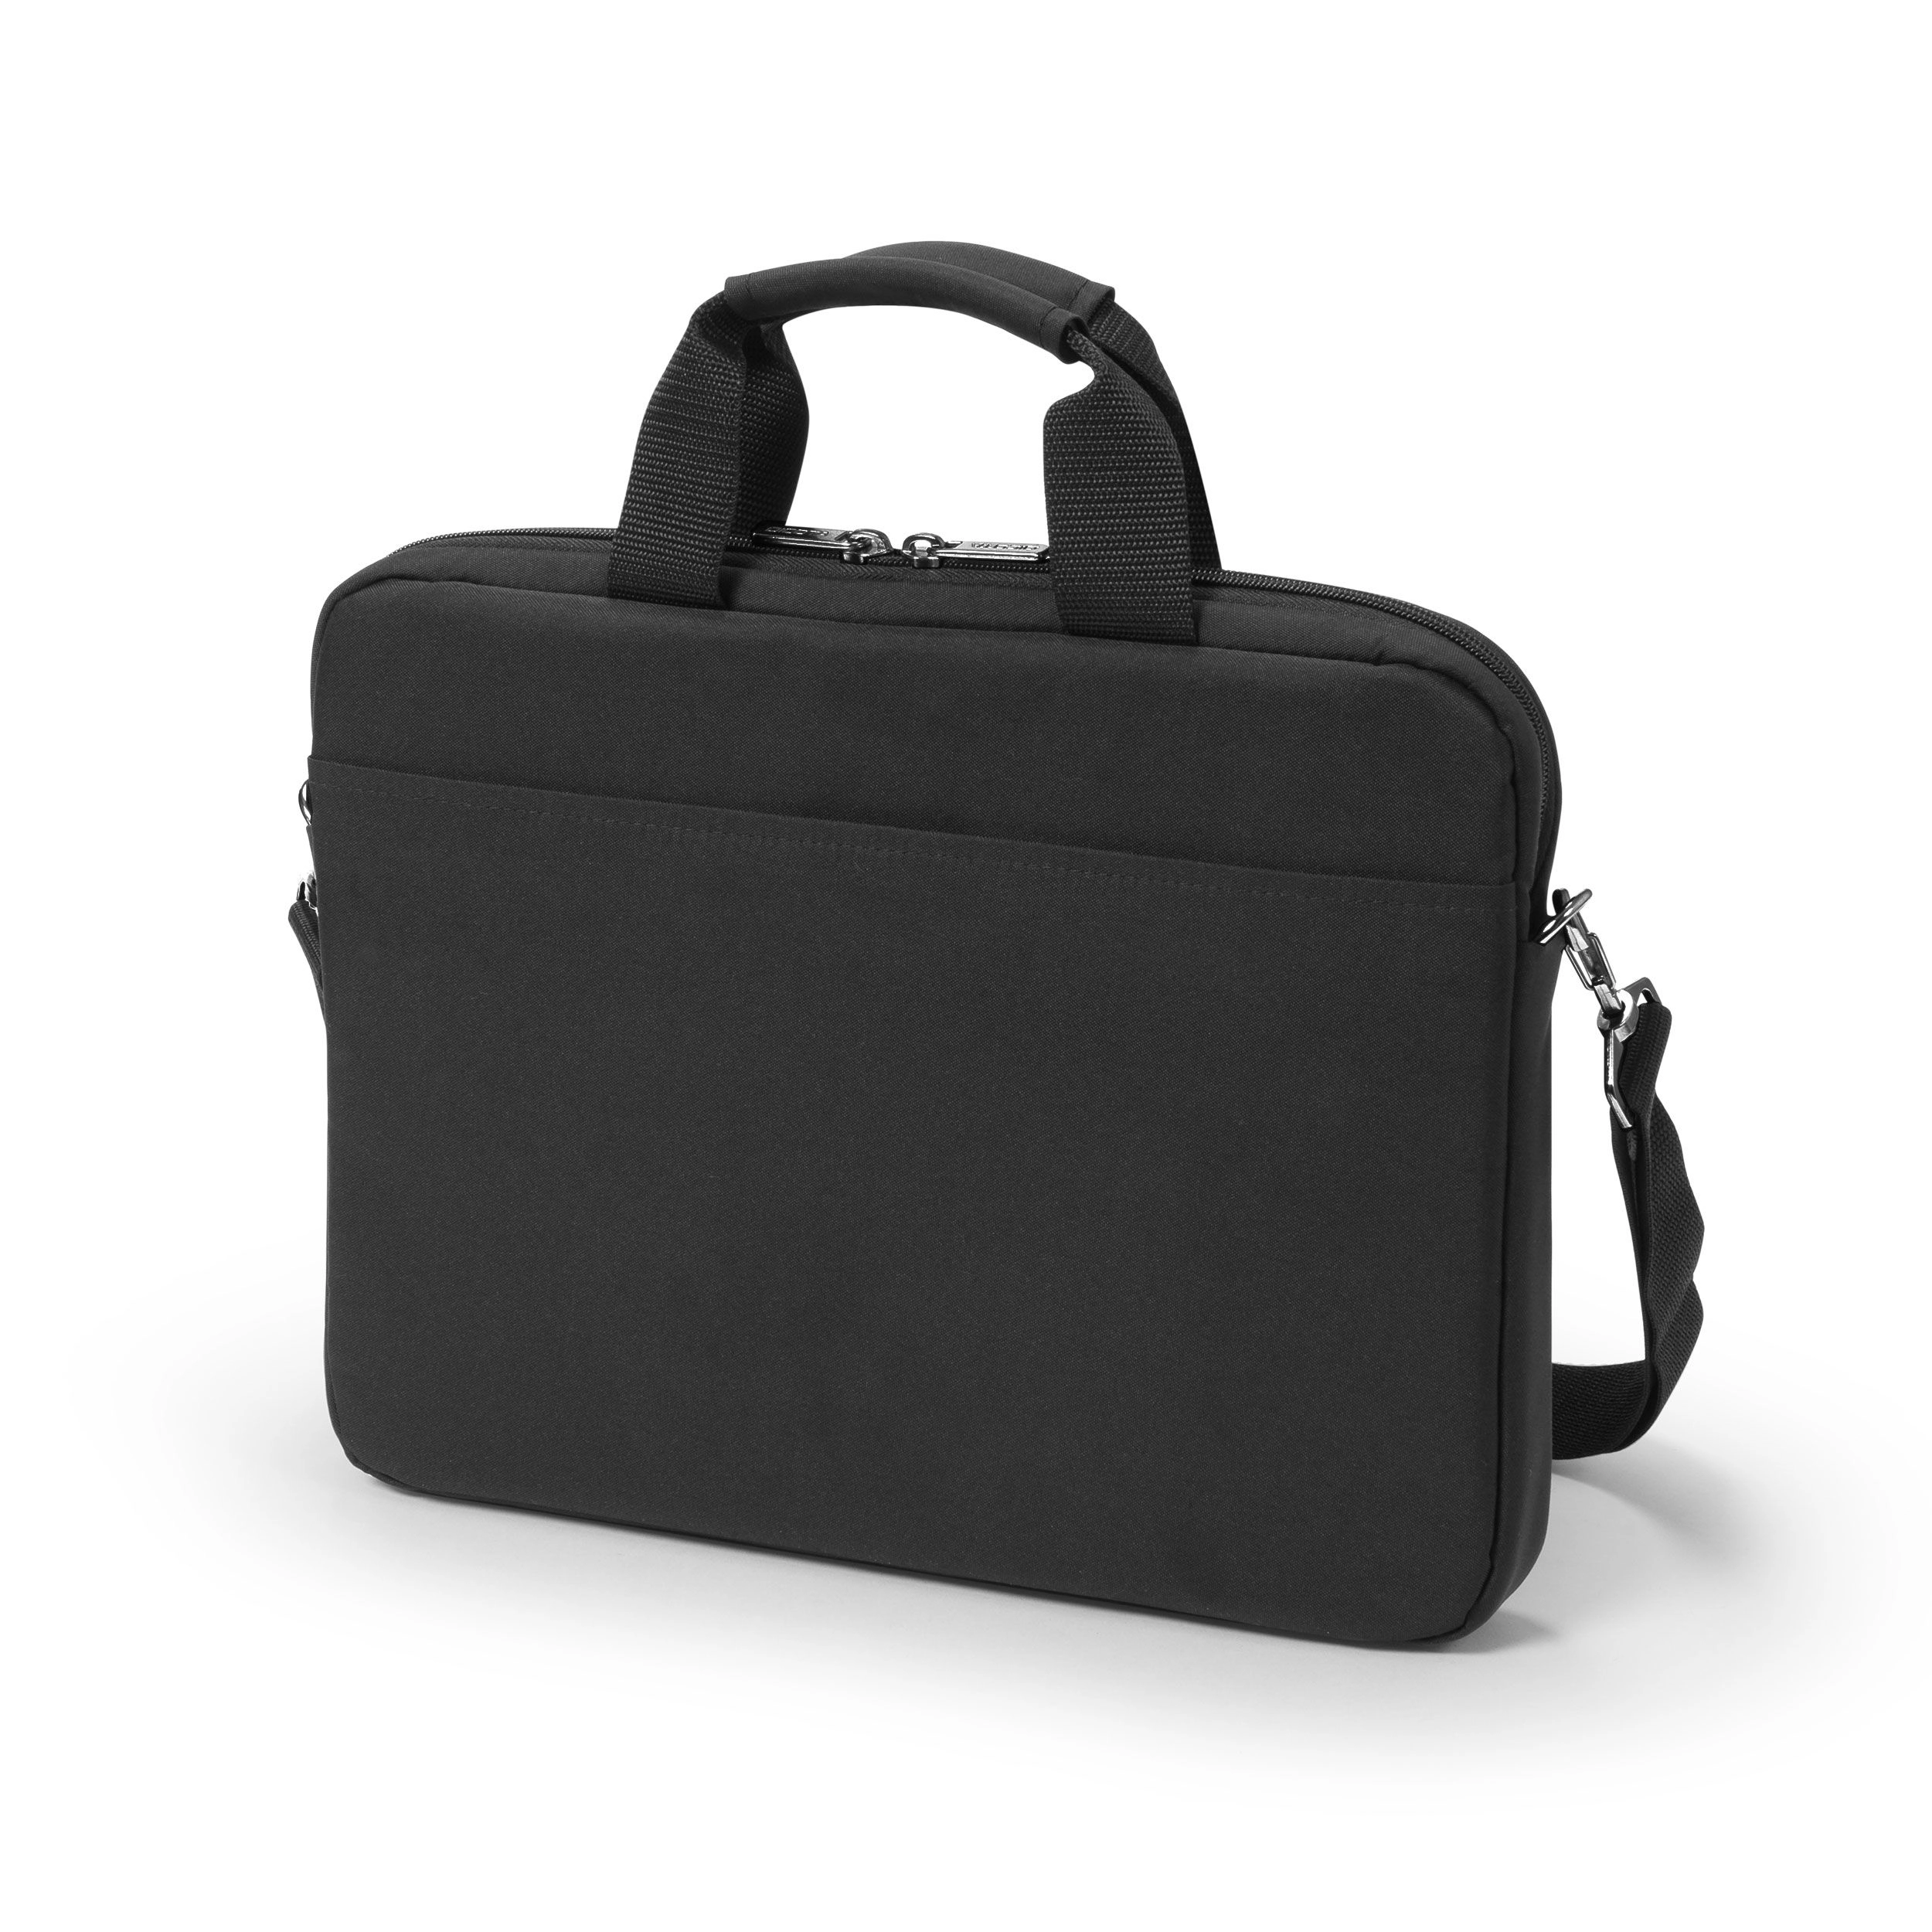 Dicota Eco Slim Case BASE - Notebook-Tasche - 12,5" Zoll